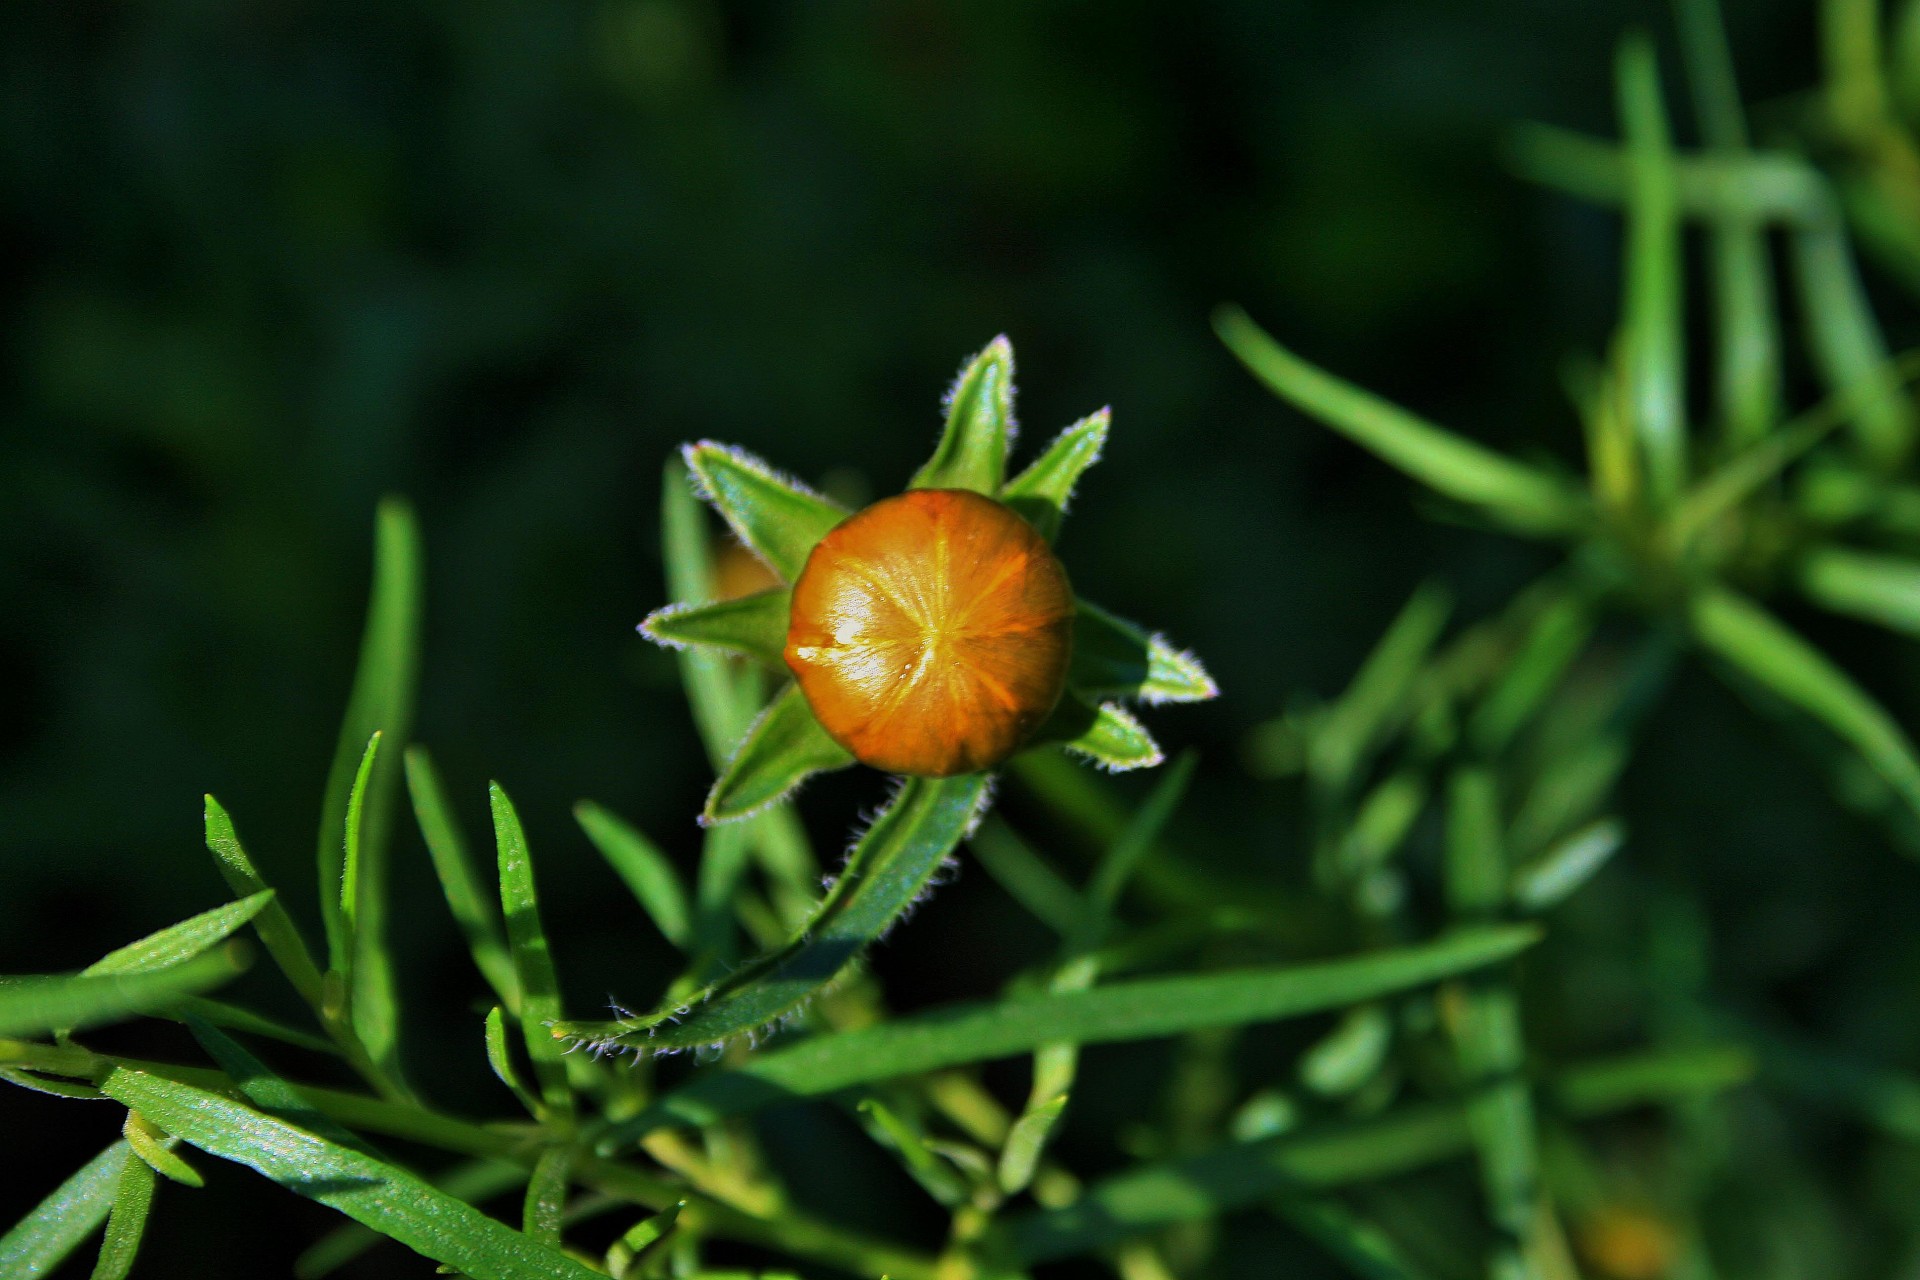 Galben daisy bud